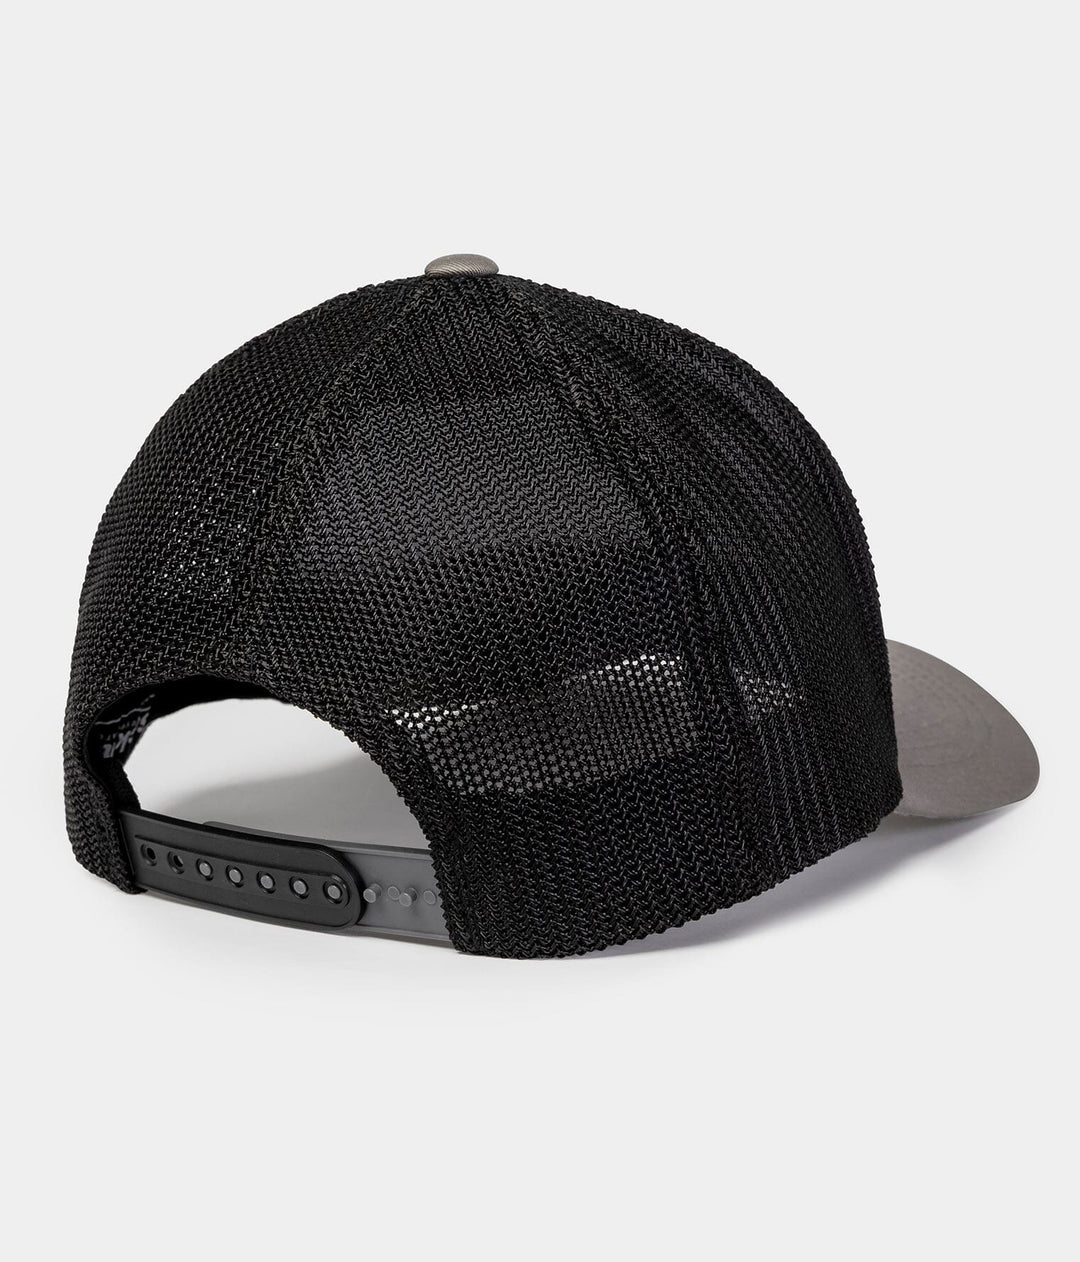 Chubbs Snapback Hat